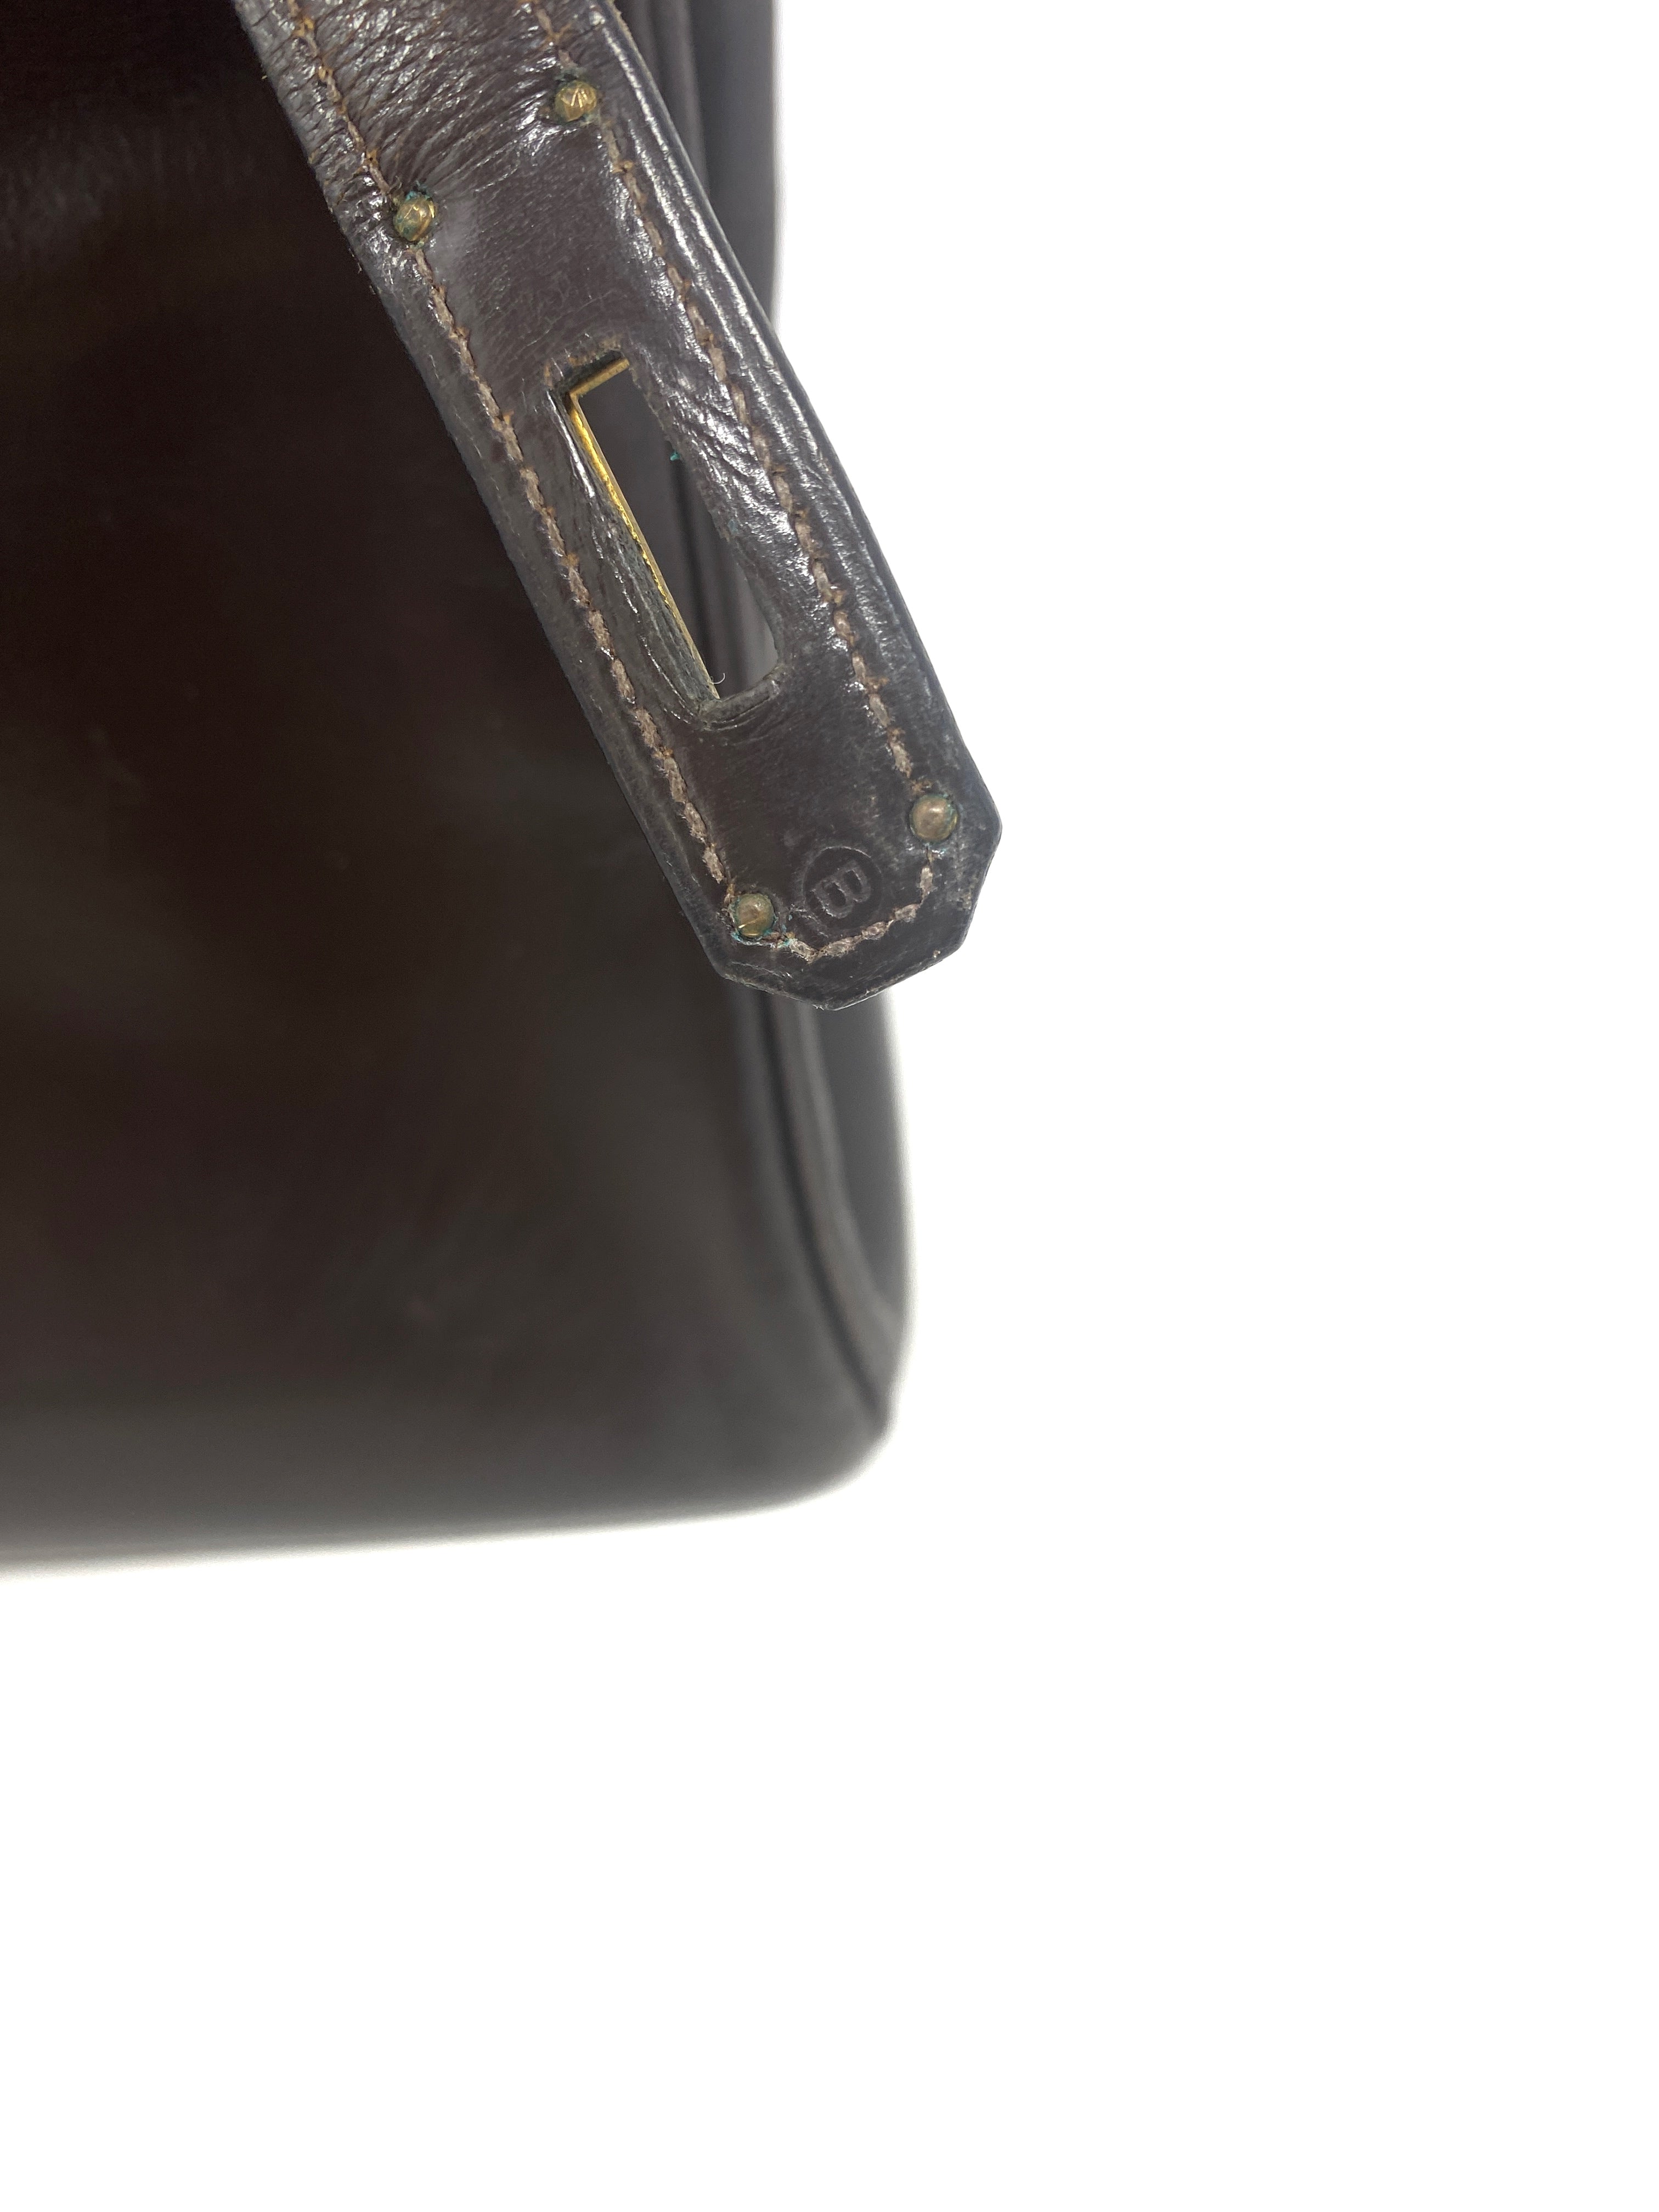 Hermes kelly bag 28 cm; brown box leather